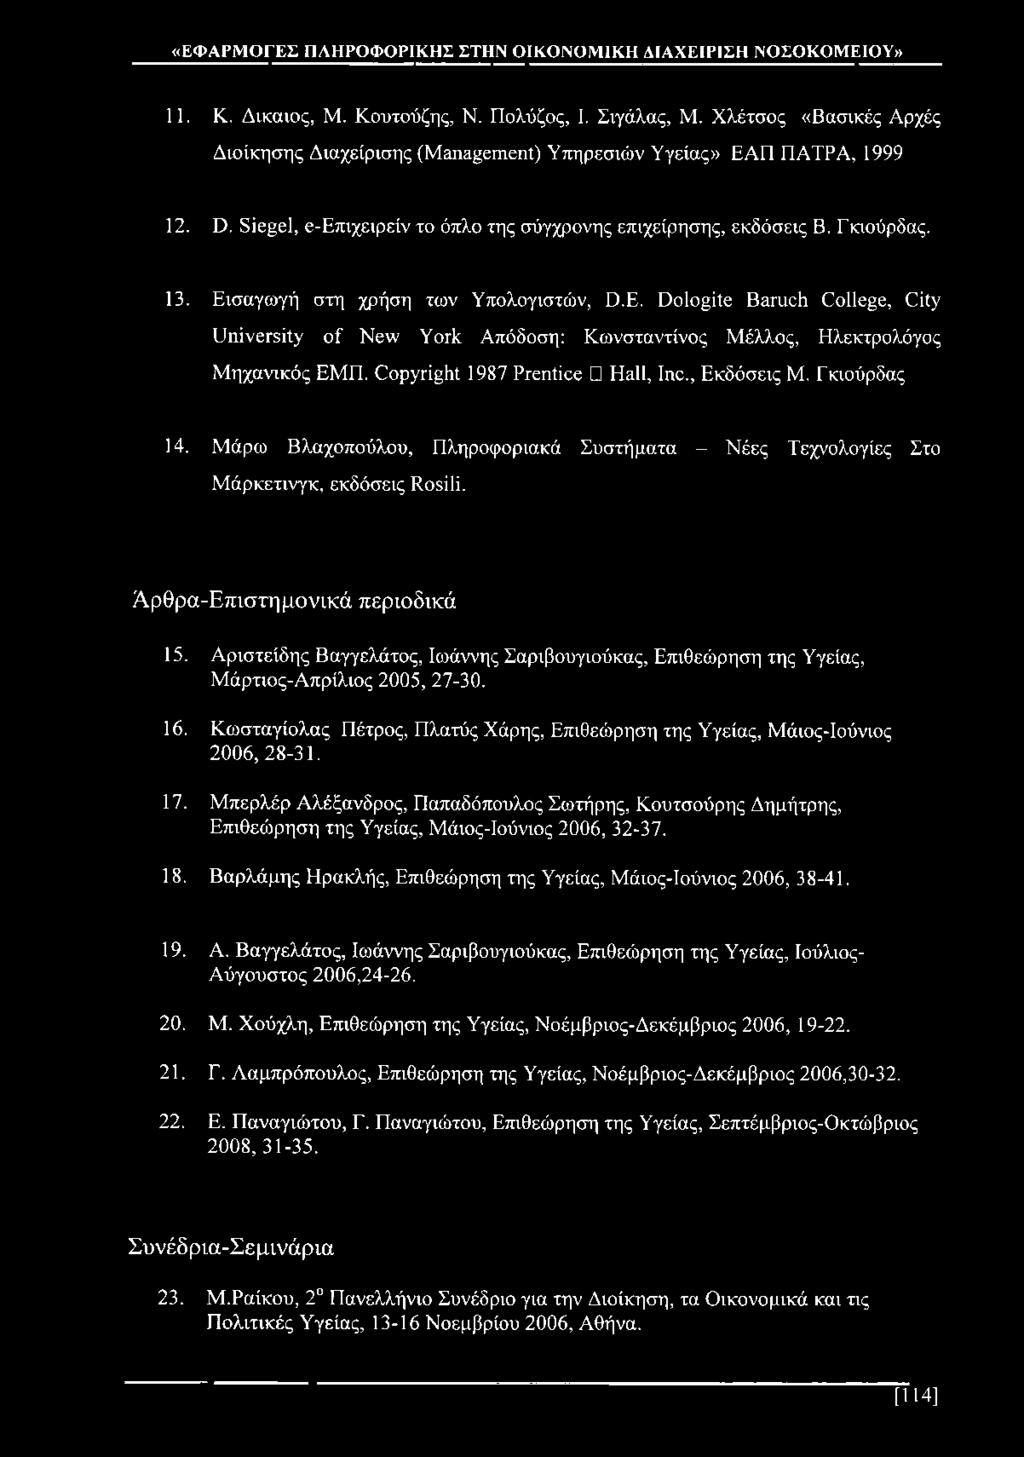 Dologite Baruch College, City University of New York Απόδοση: Κωνσταντίνος Μέλλος, Ηλεκτρολόγος Μηχανικός ΕΜΠ. Copyright 1987 Prentice Hall, Inc., Εκδόσεις Μ. Εκιούρδας 14.